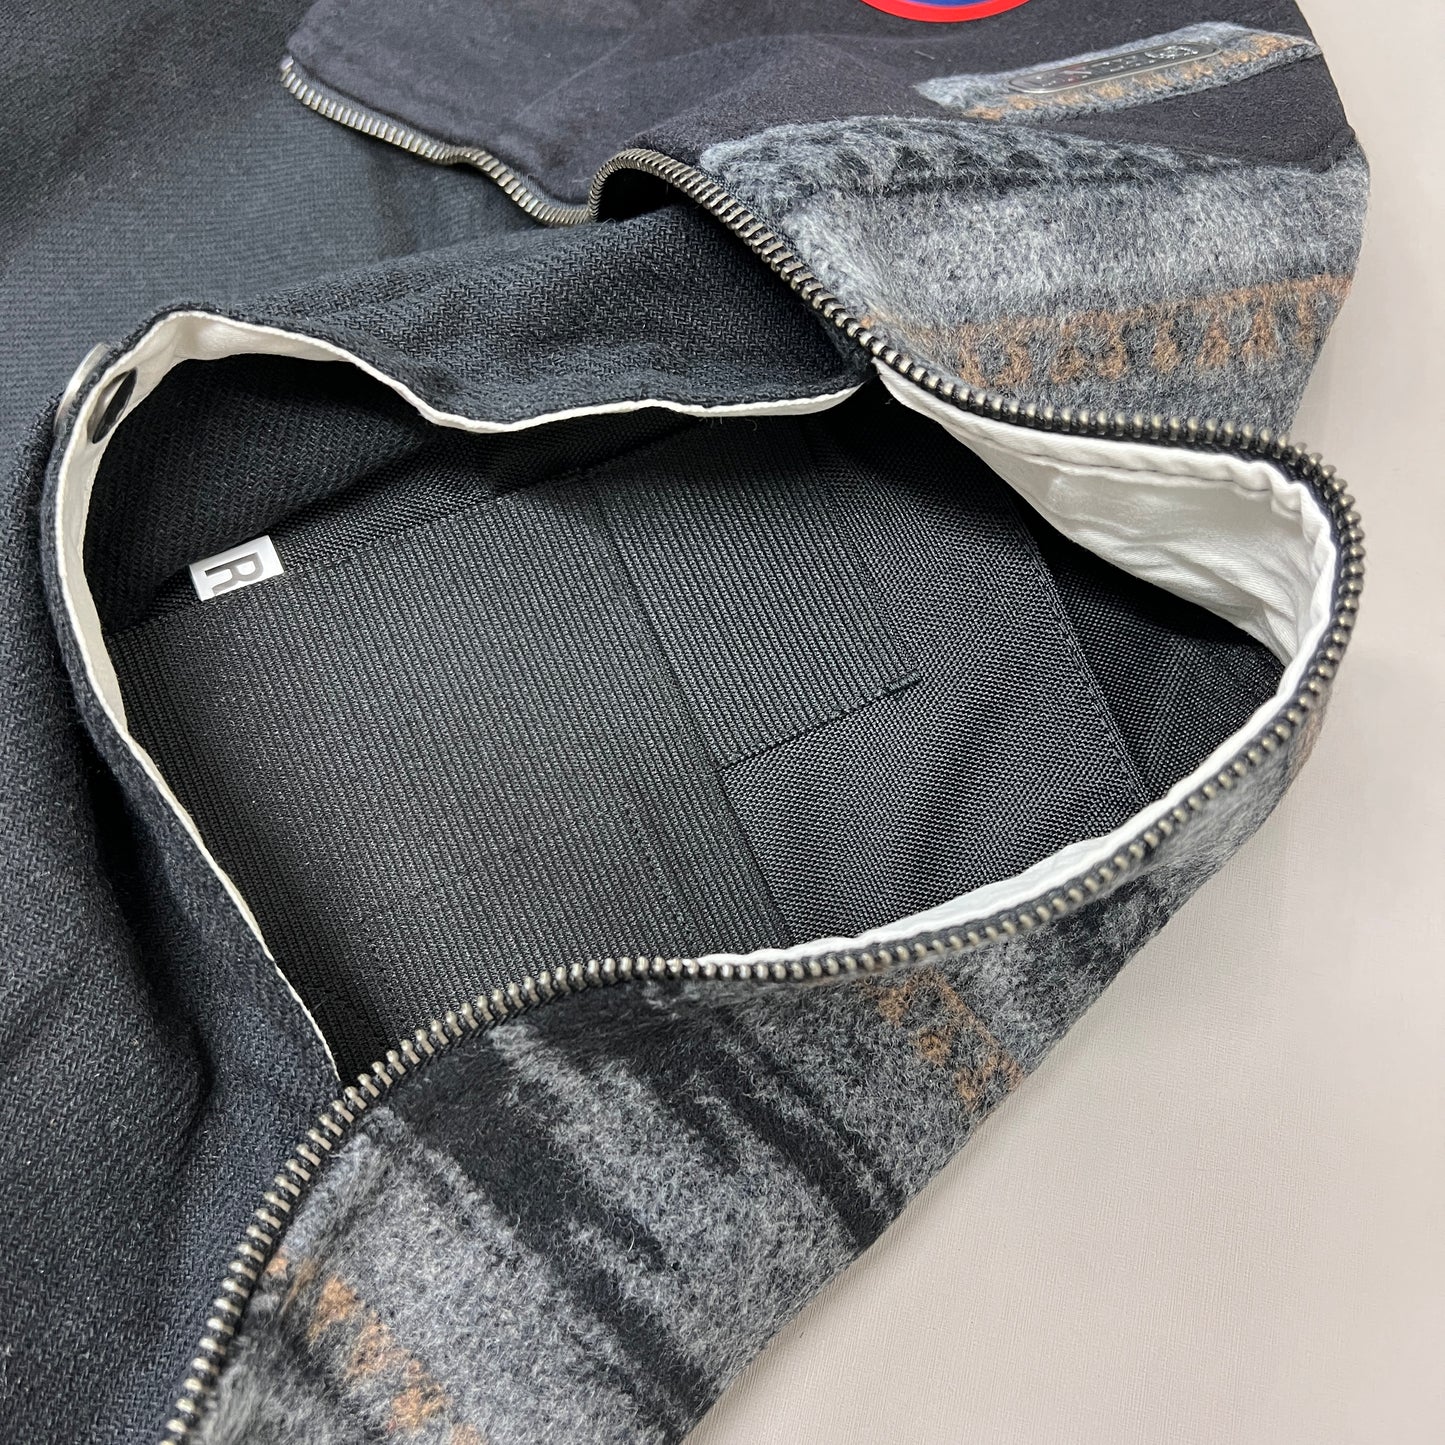 CINCH Wooly Concealed Carry Vest Men's SZ XS Black MWV1543006 (New)